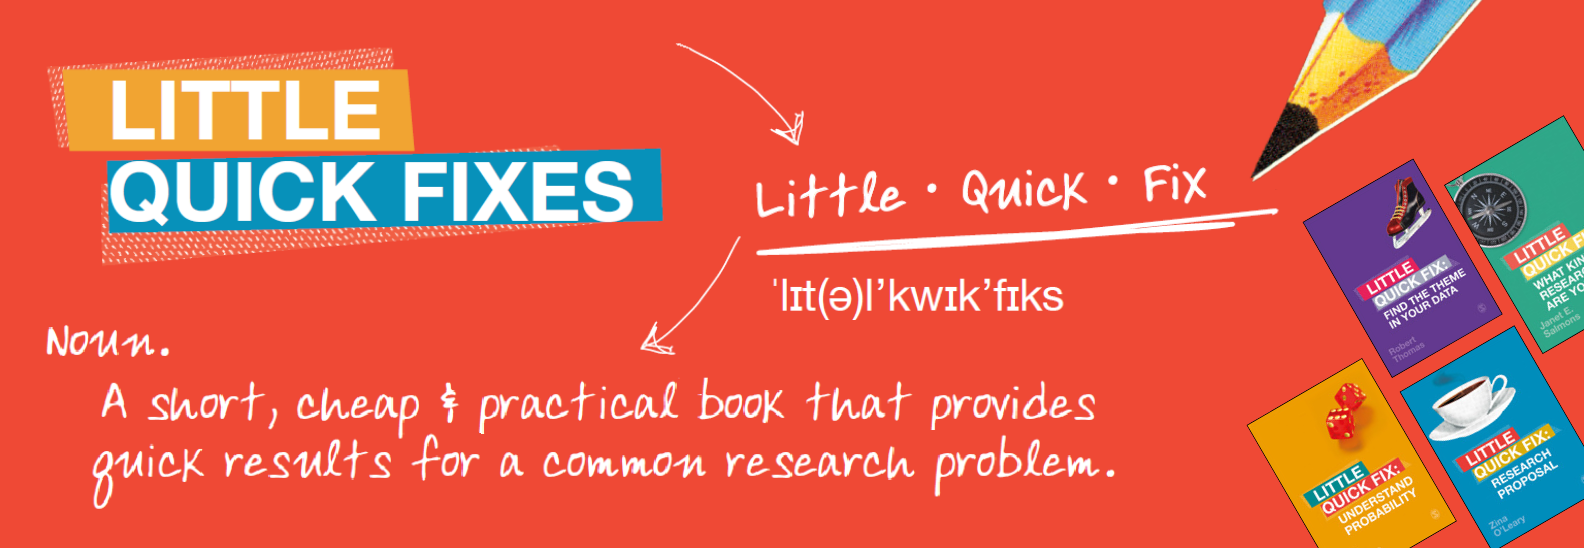 The Little Quick Fix book series